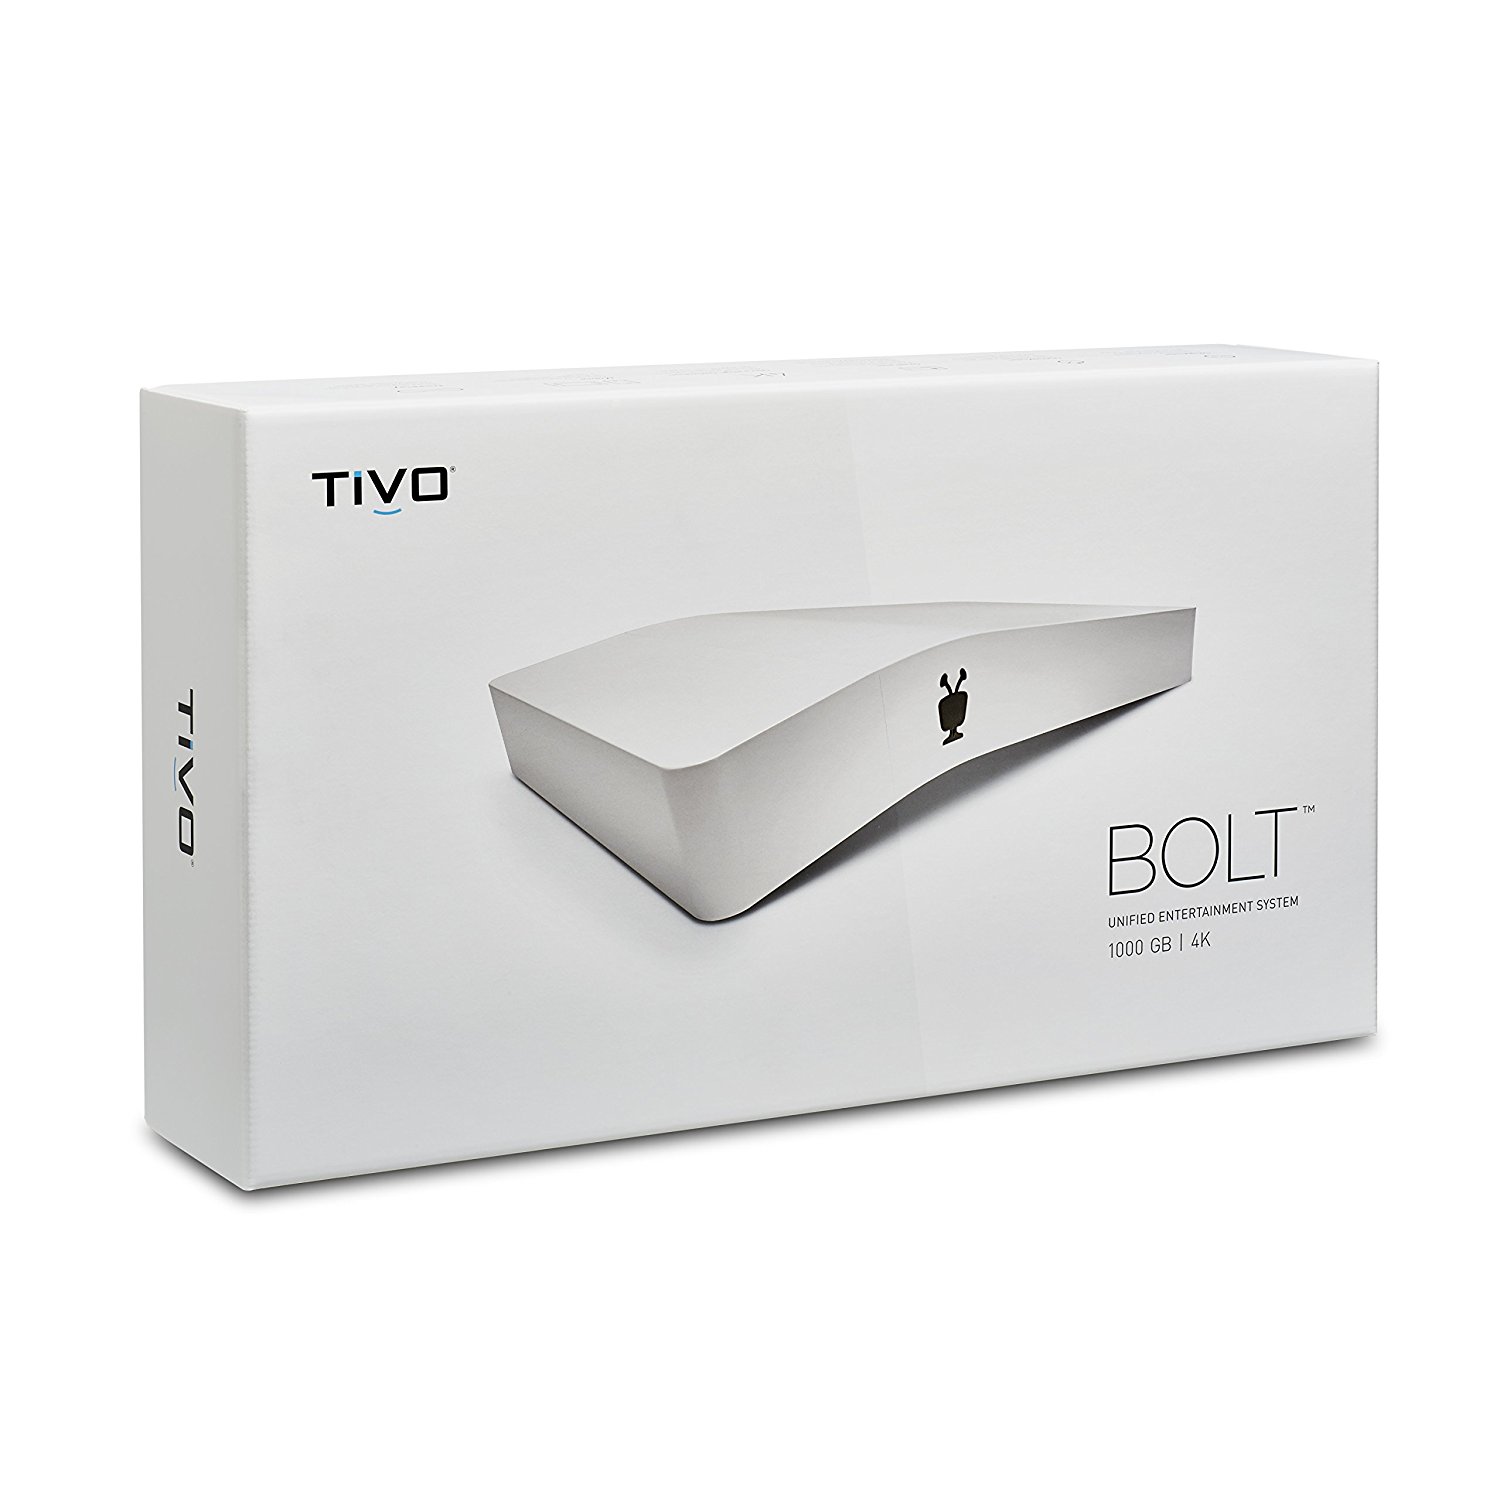 TiVo BOLT 1000 GB DVR: Digital Video Recorder and Streaming Media ...